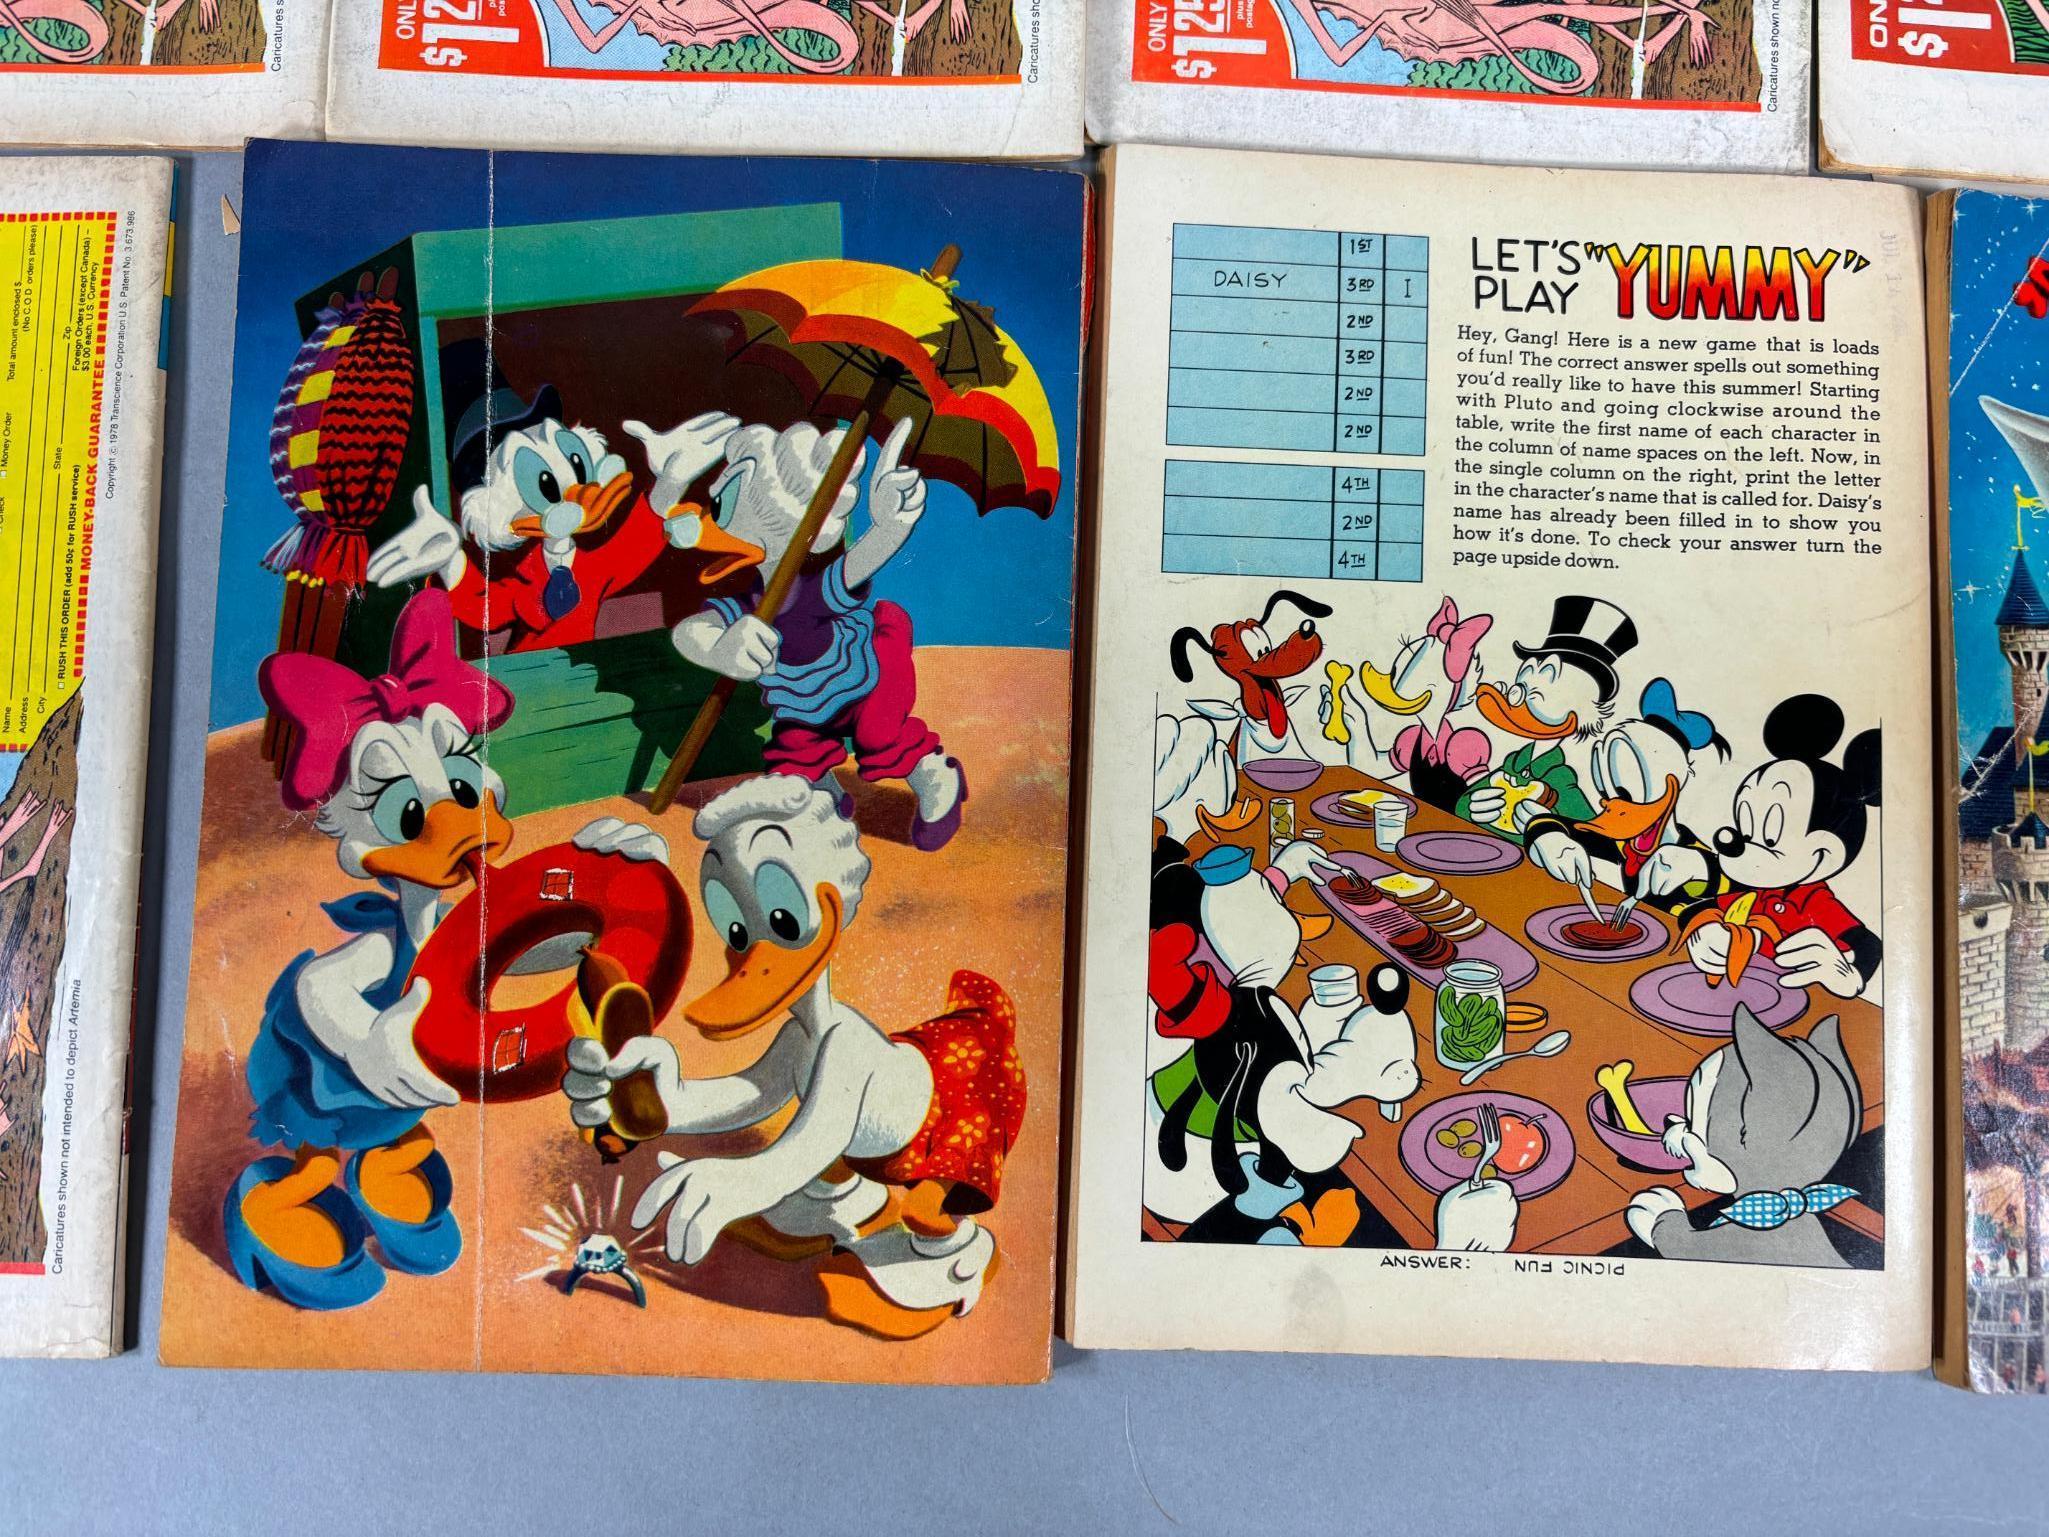 Group Lot of 20 Vintage Comic Books Disney Casper, Daffy